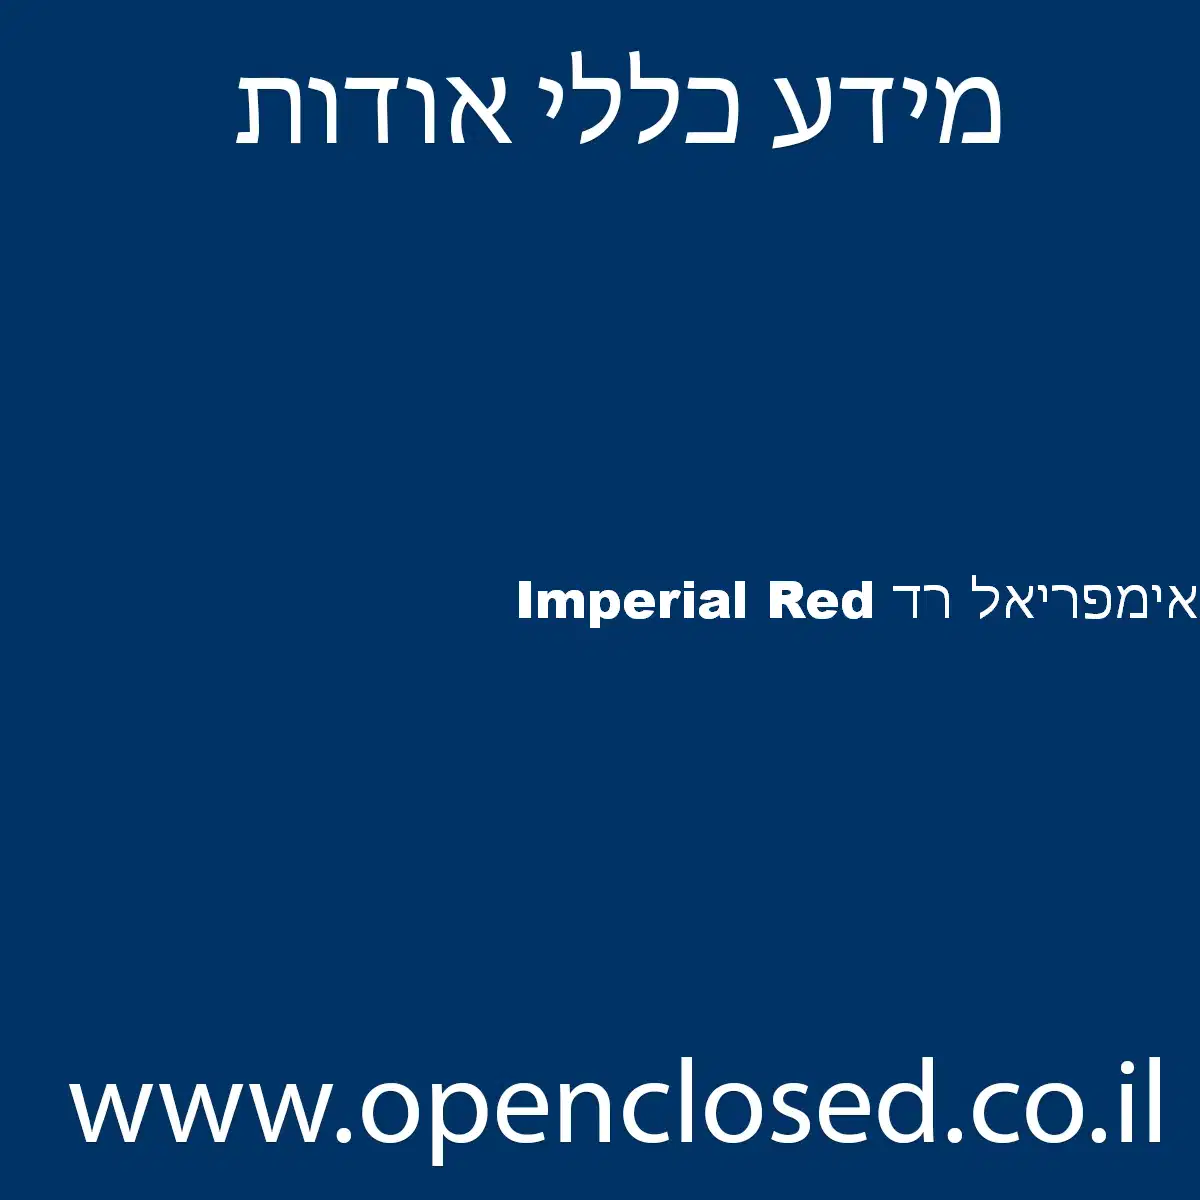 Imperial Red אימפריאל רד